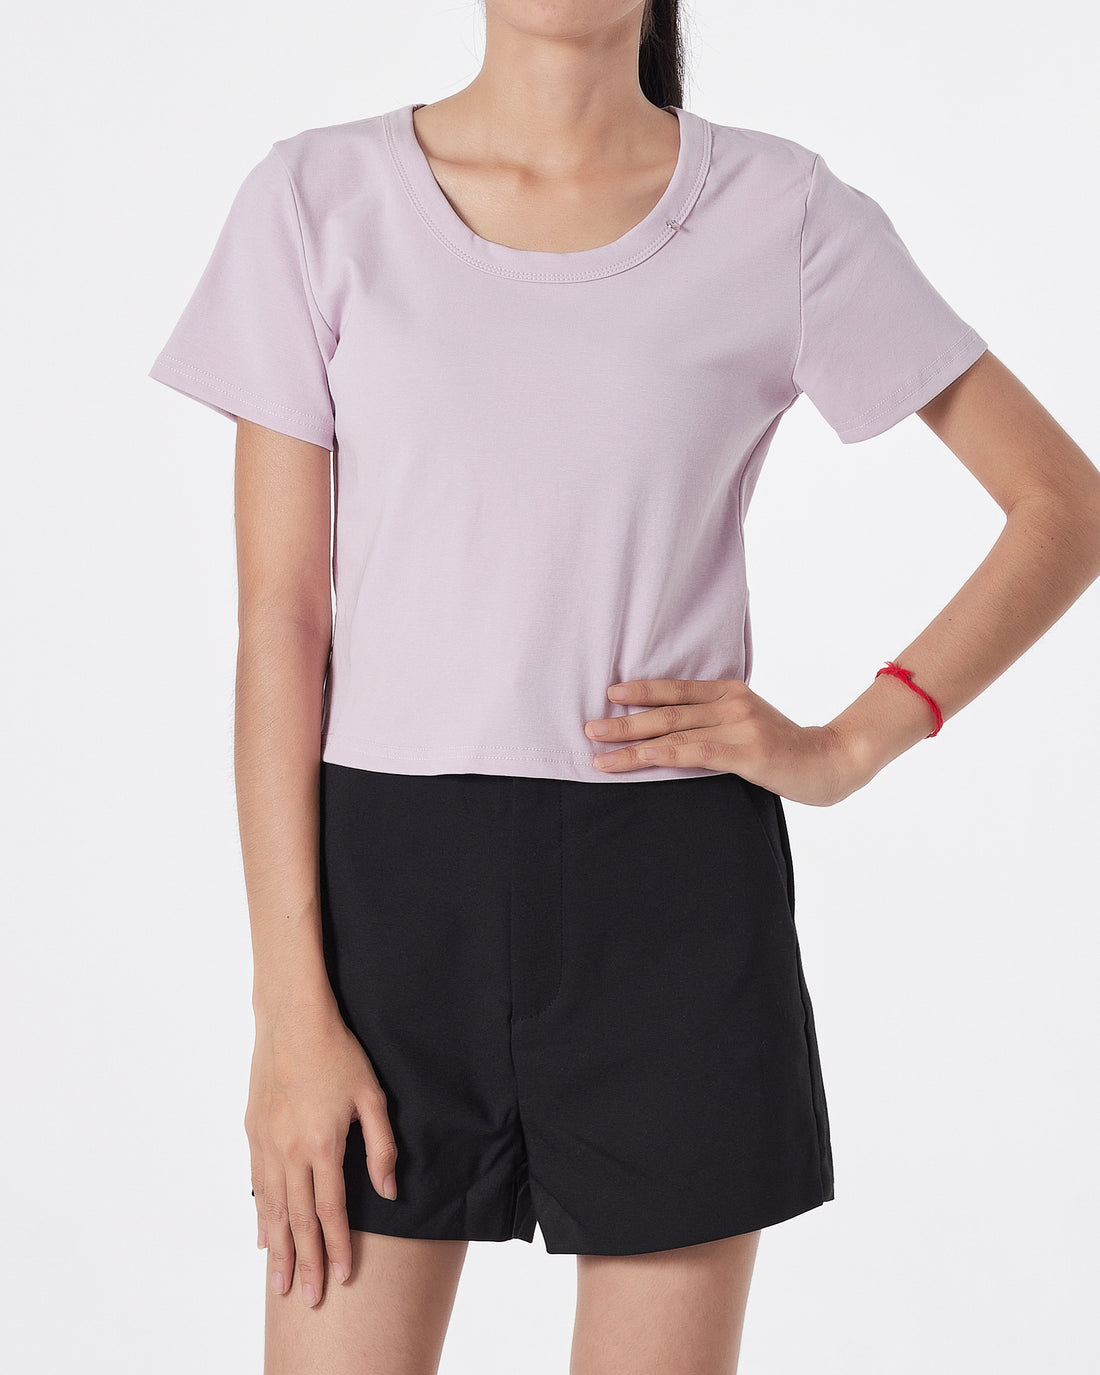 Purple Lady T-Shirt Crop Top 10.90